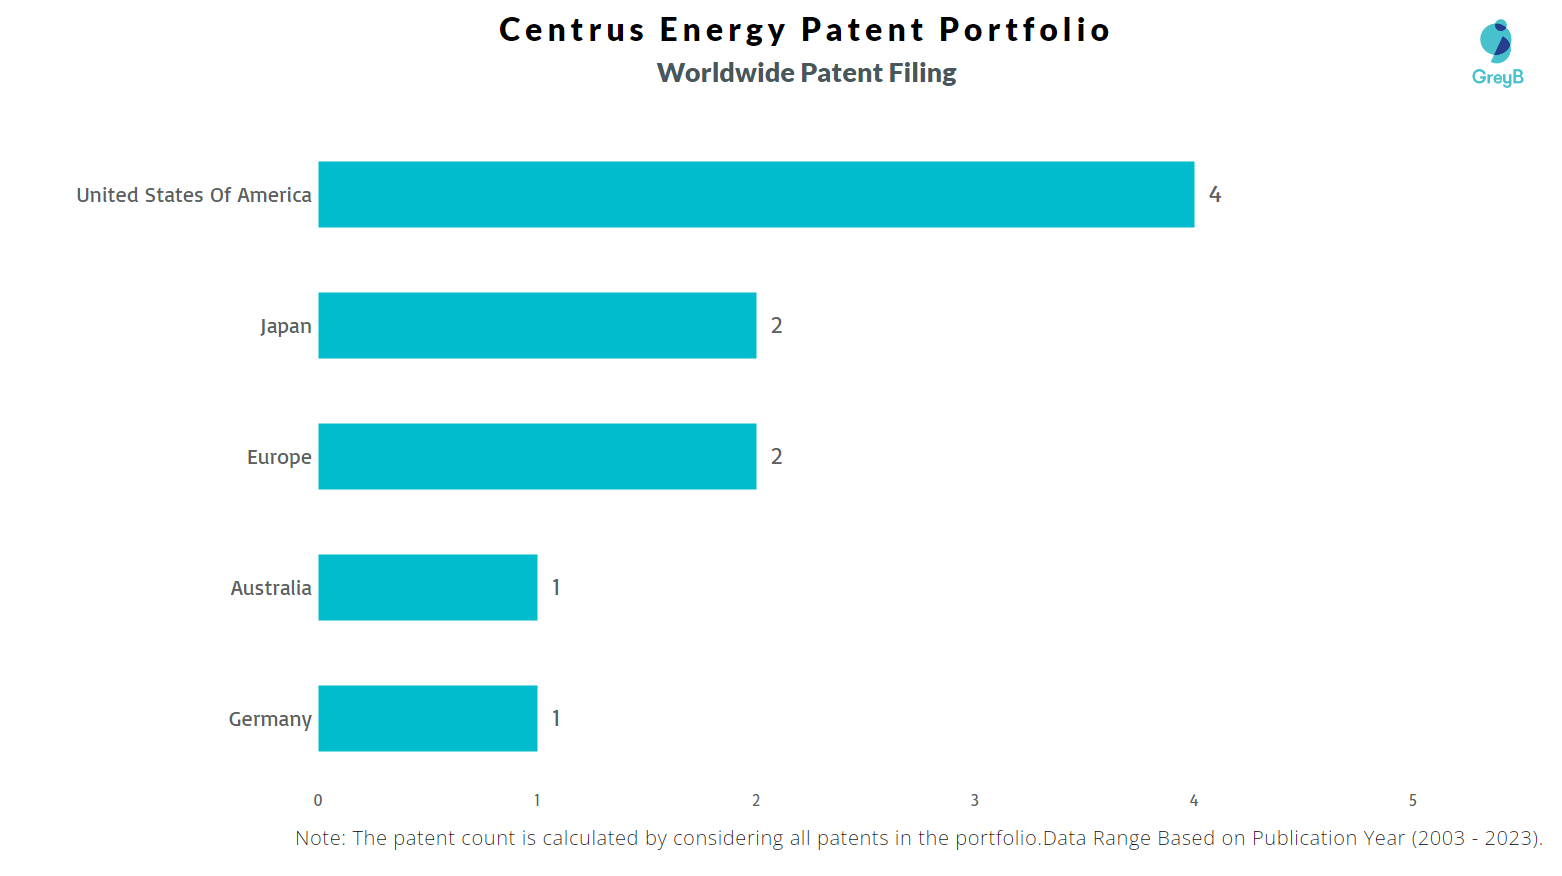 Centrus Energy Worldwide Patent Filing